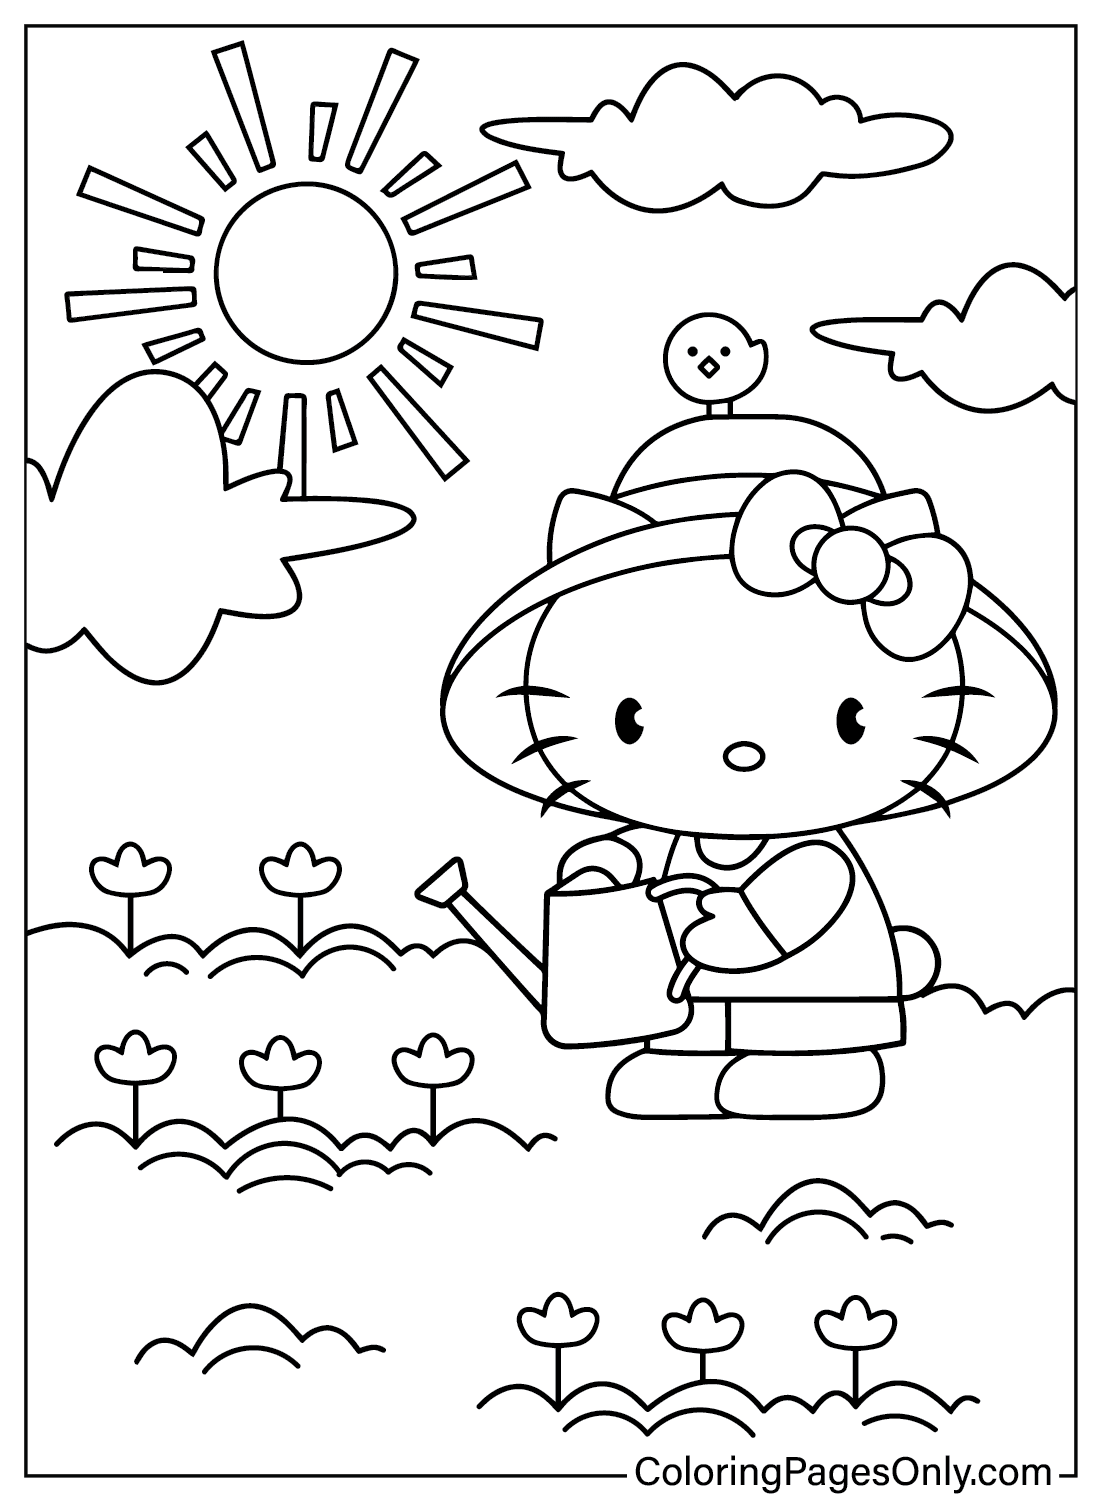 Раскраска Hello Kitty для печати бесплатно